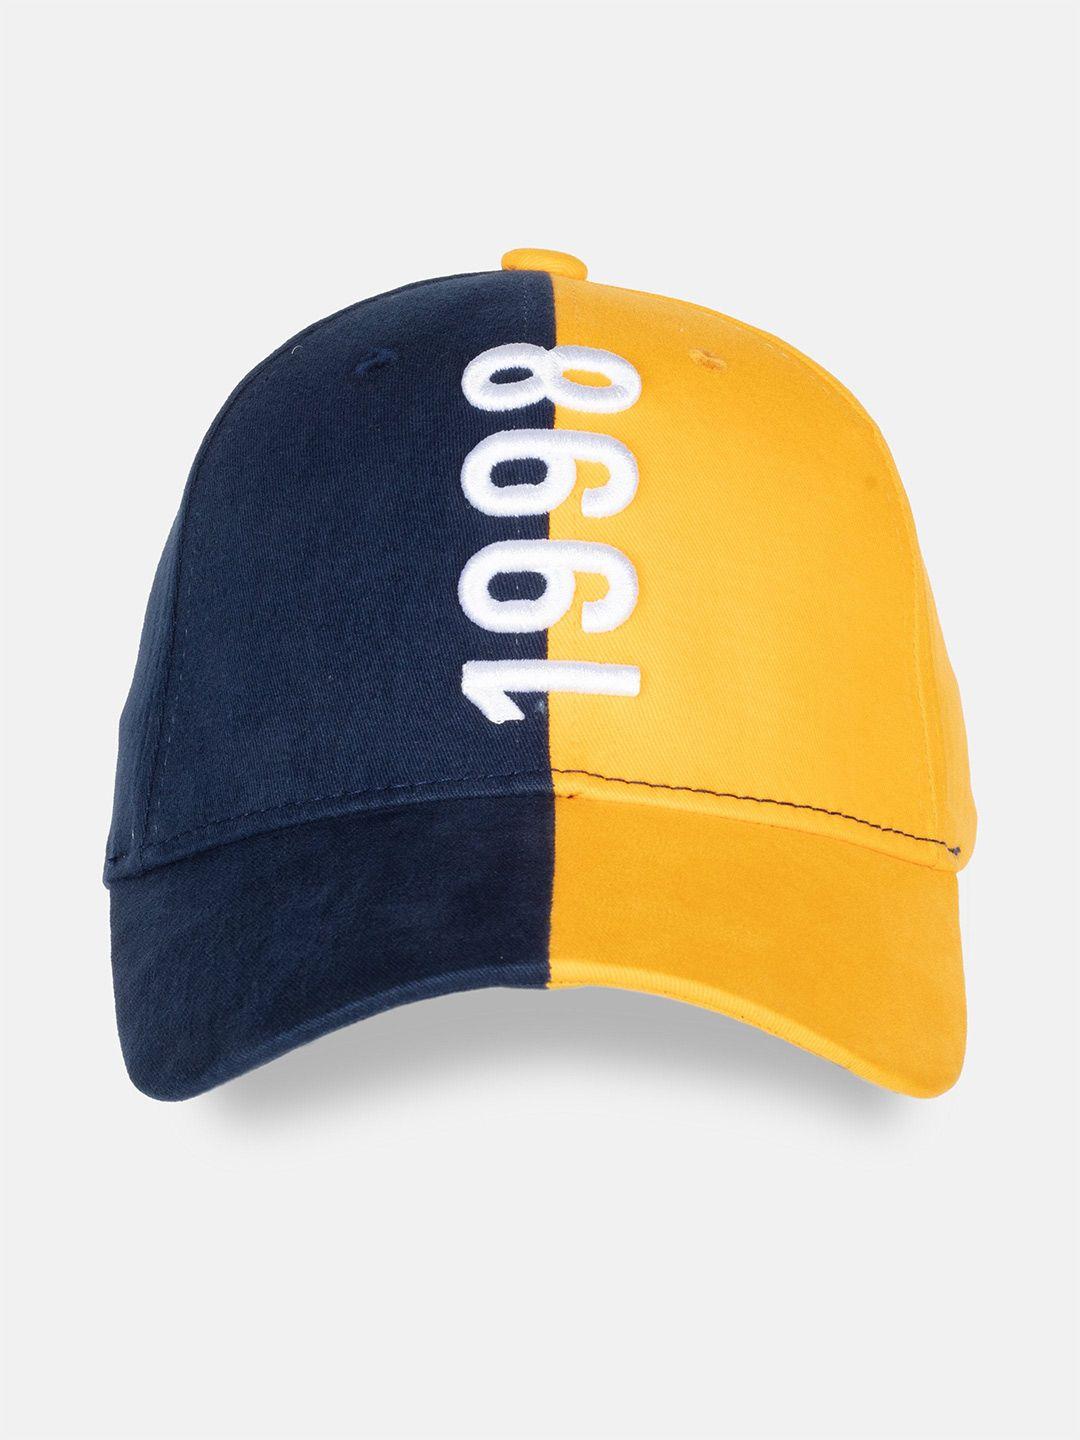 status quo men yellow & navy blue colourblocked visor cap